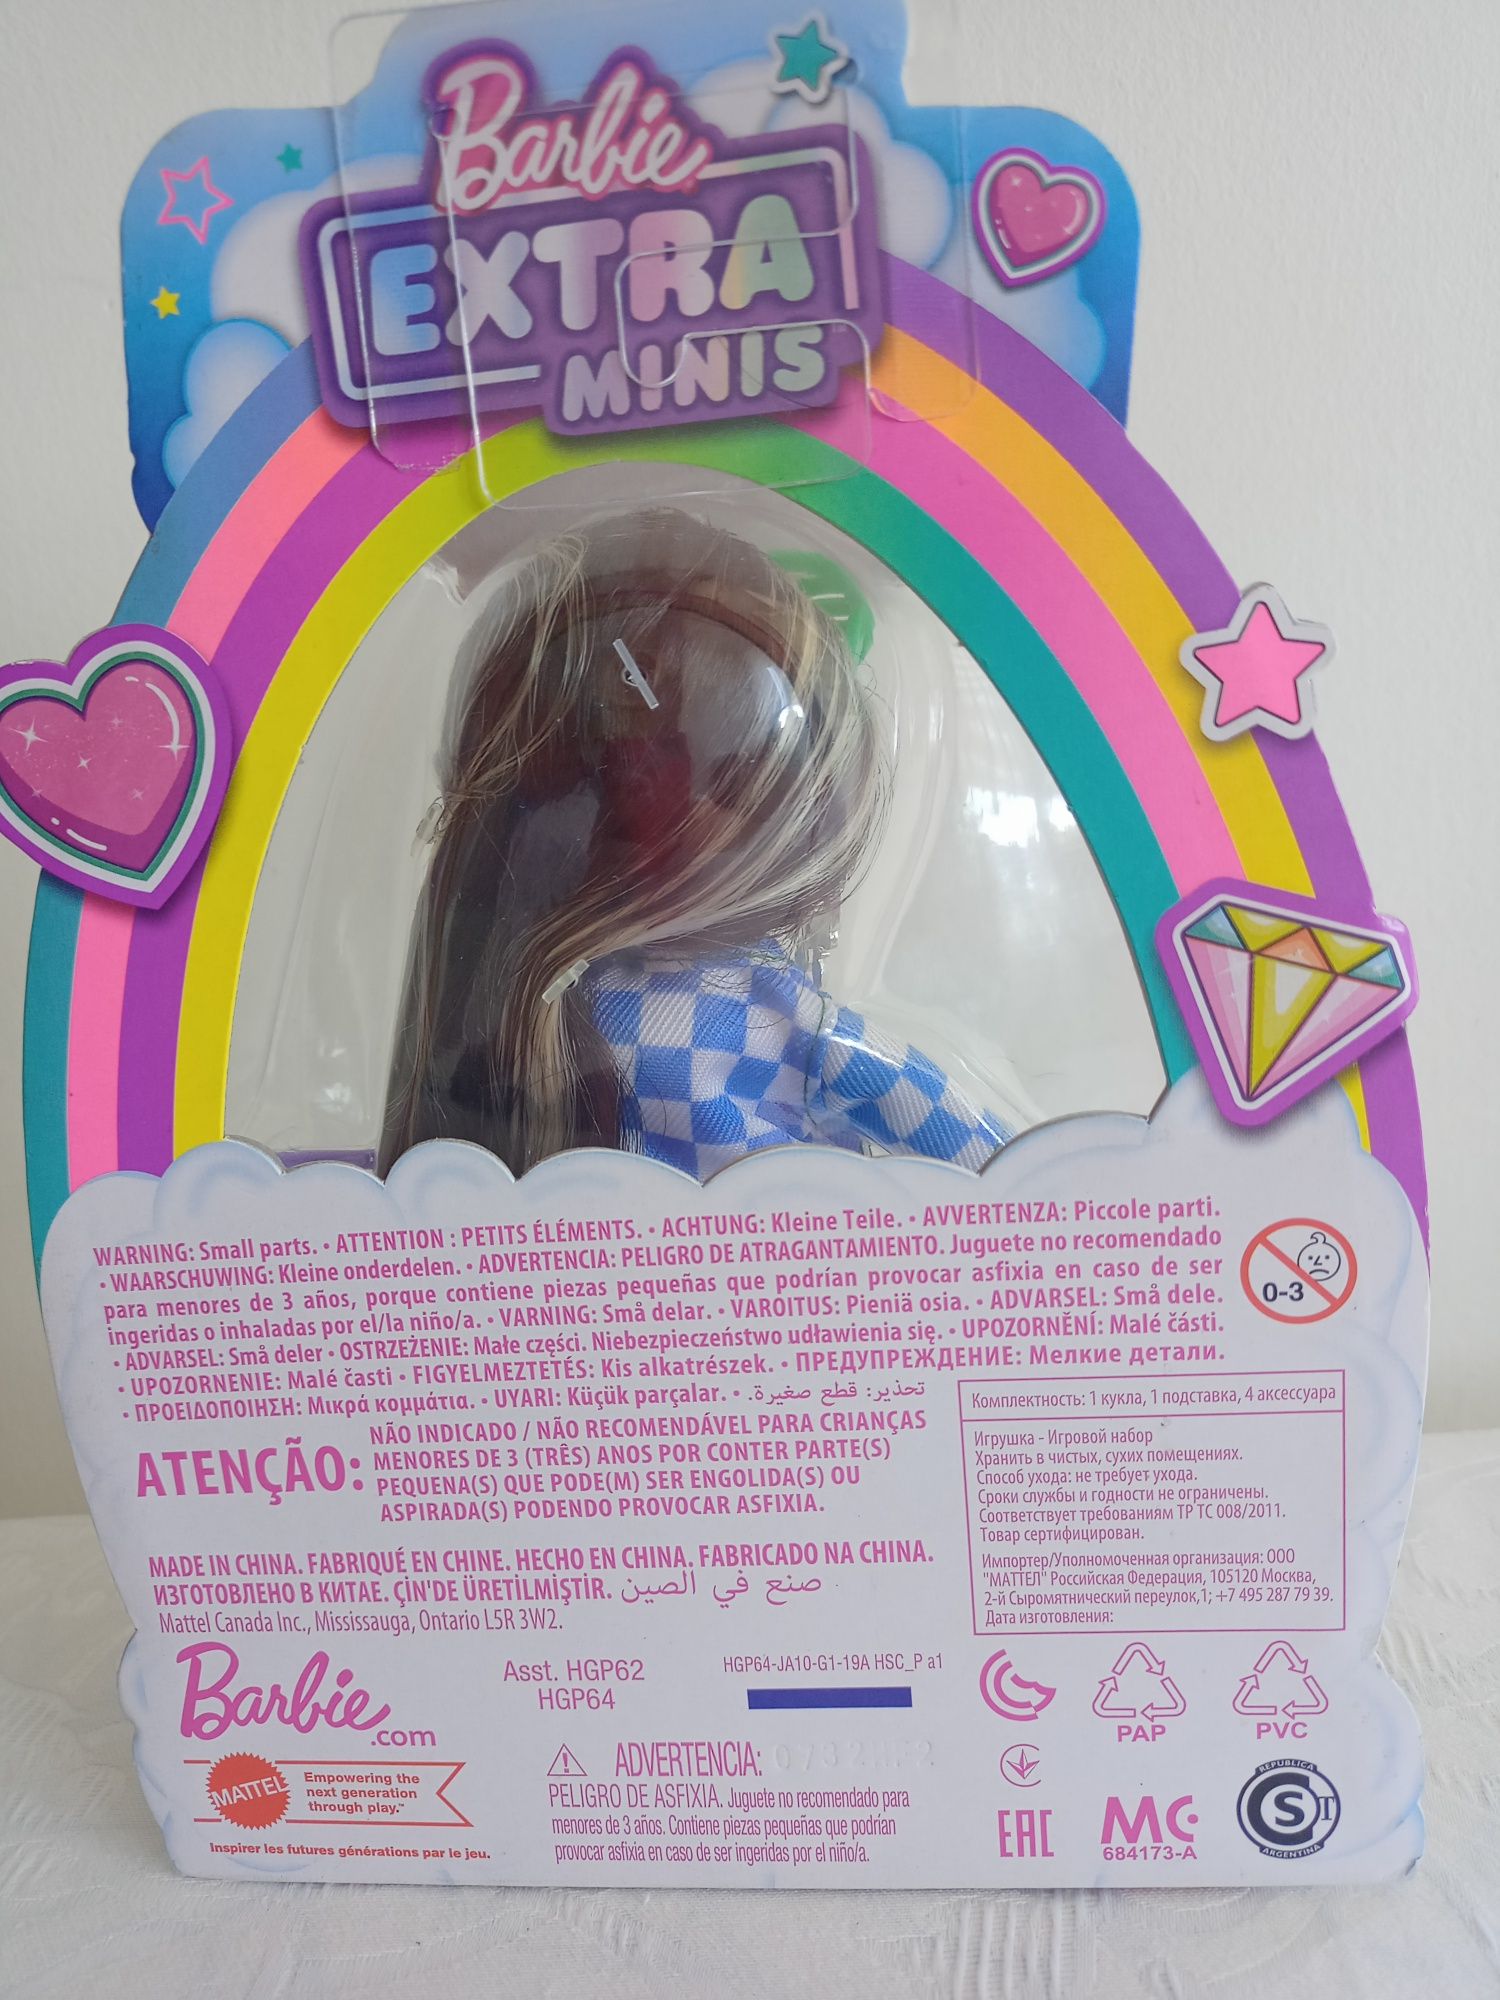 Lalka Barbie Extra minis